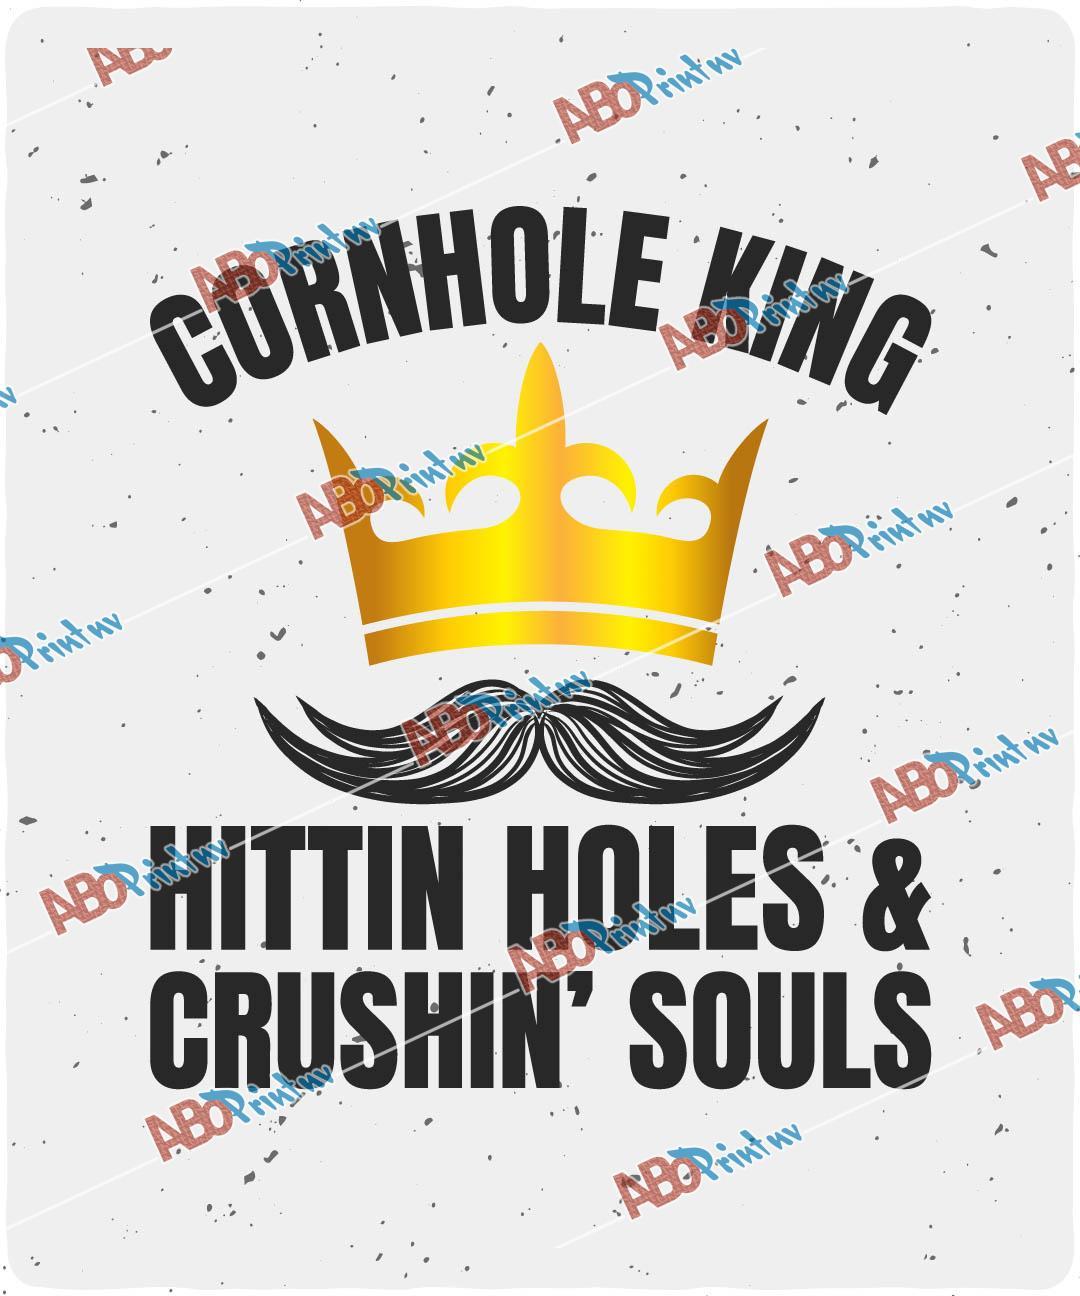 Cornhole King Hittin Holes And Crushin Souls.jpg